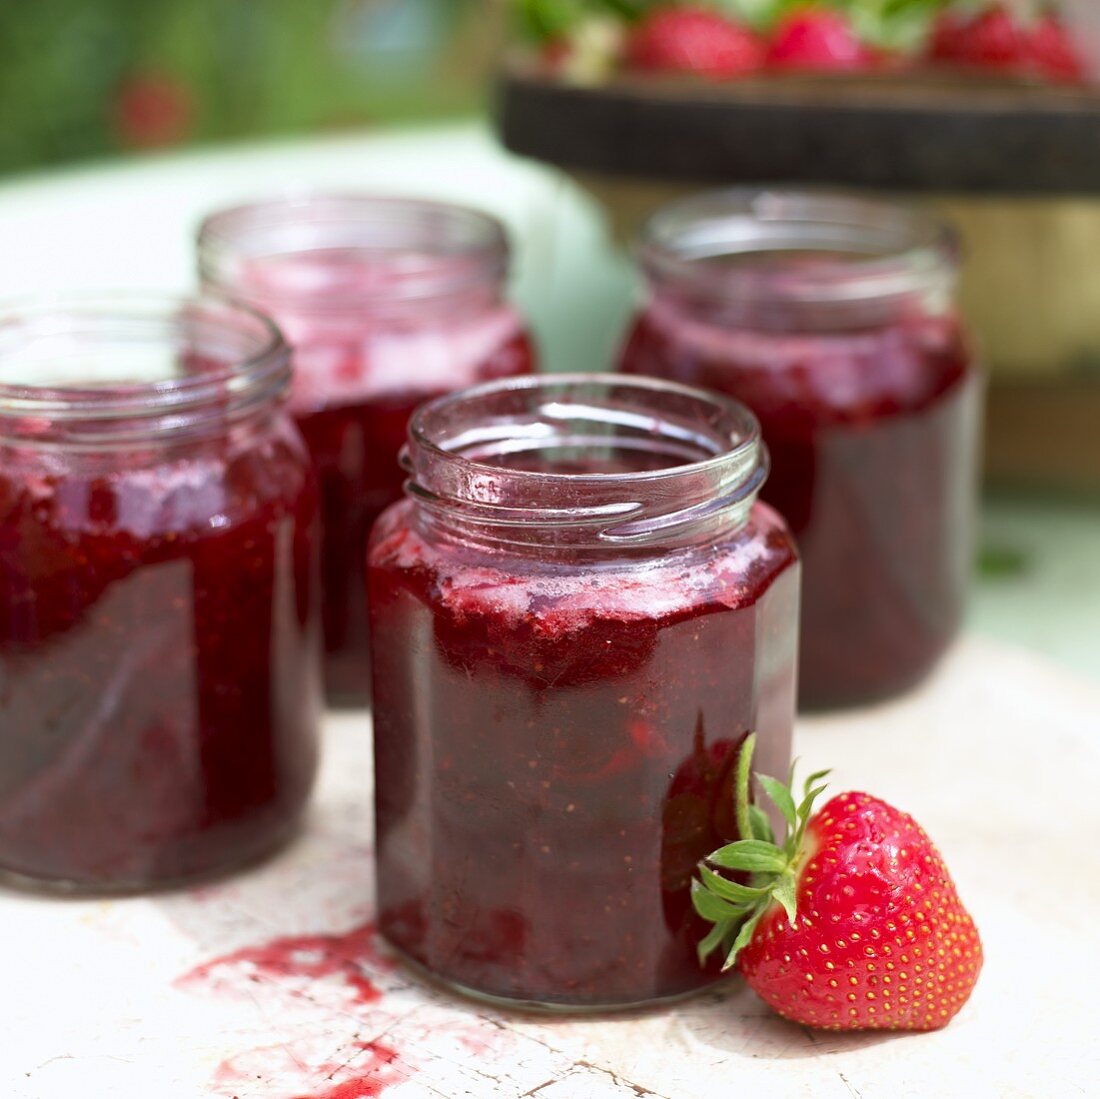 Several jars of strawberry jam